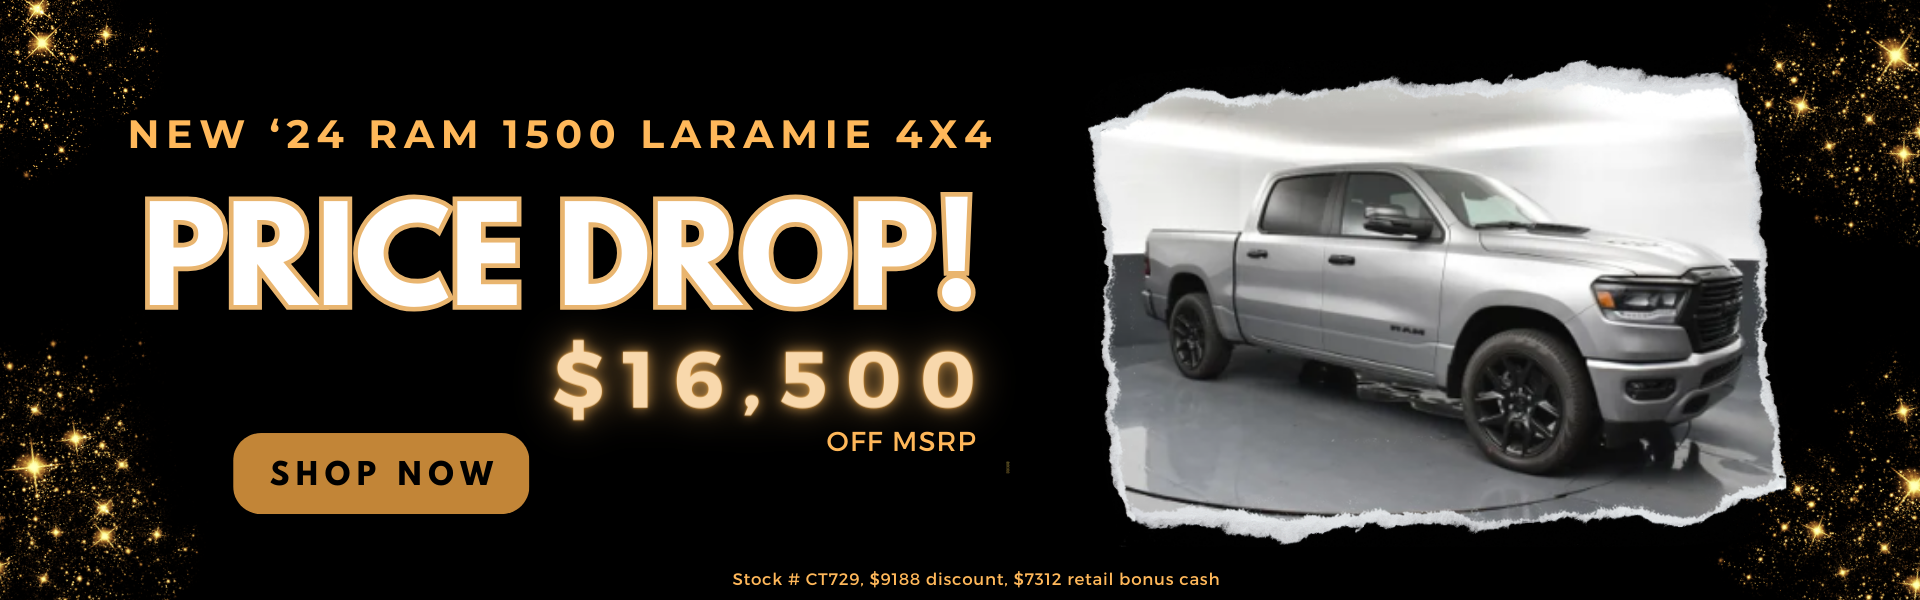 '24 Ram 1500 Laramie 4x4